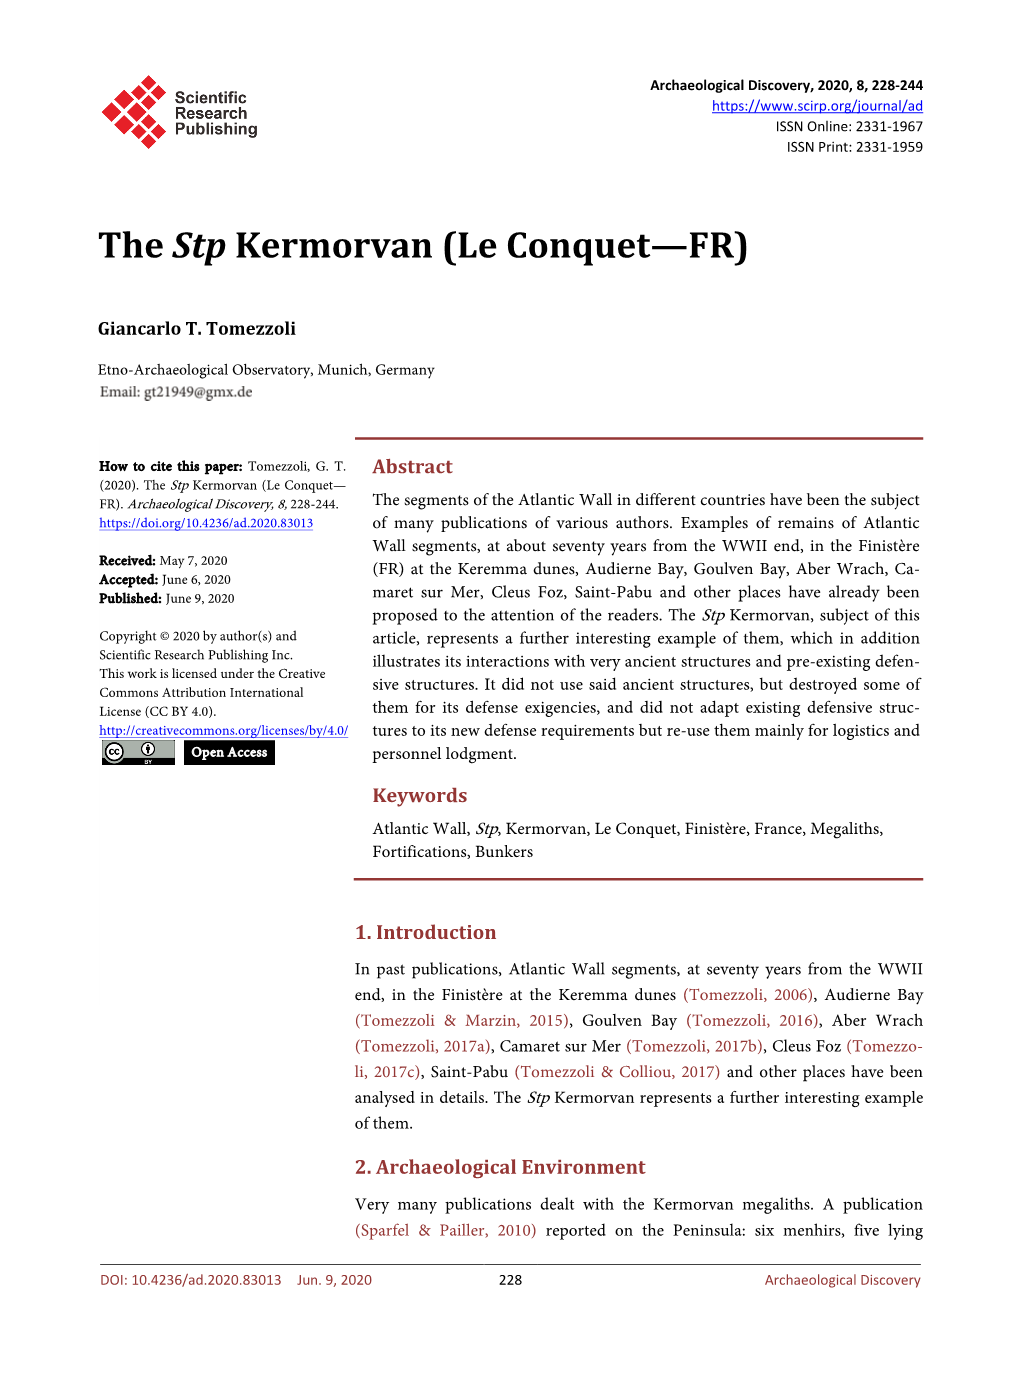 The Stp Kermorvan (Le Conquet—FR)